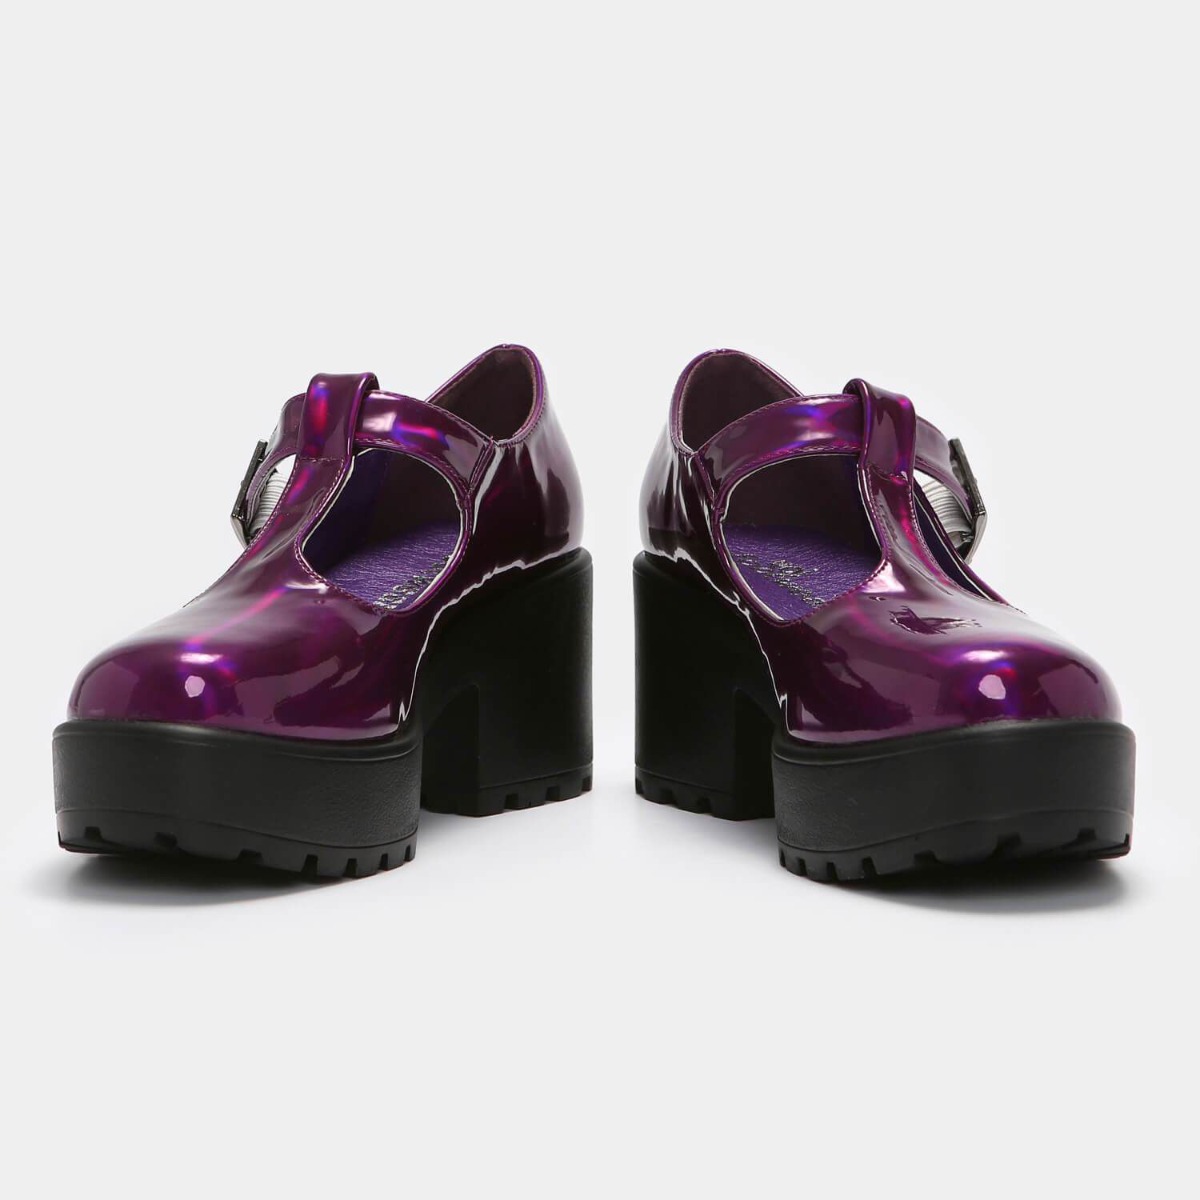 kfnd35purbbbbb_chaussures-mary-janes-lolita-glam-rock-sai-violet-metallique